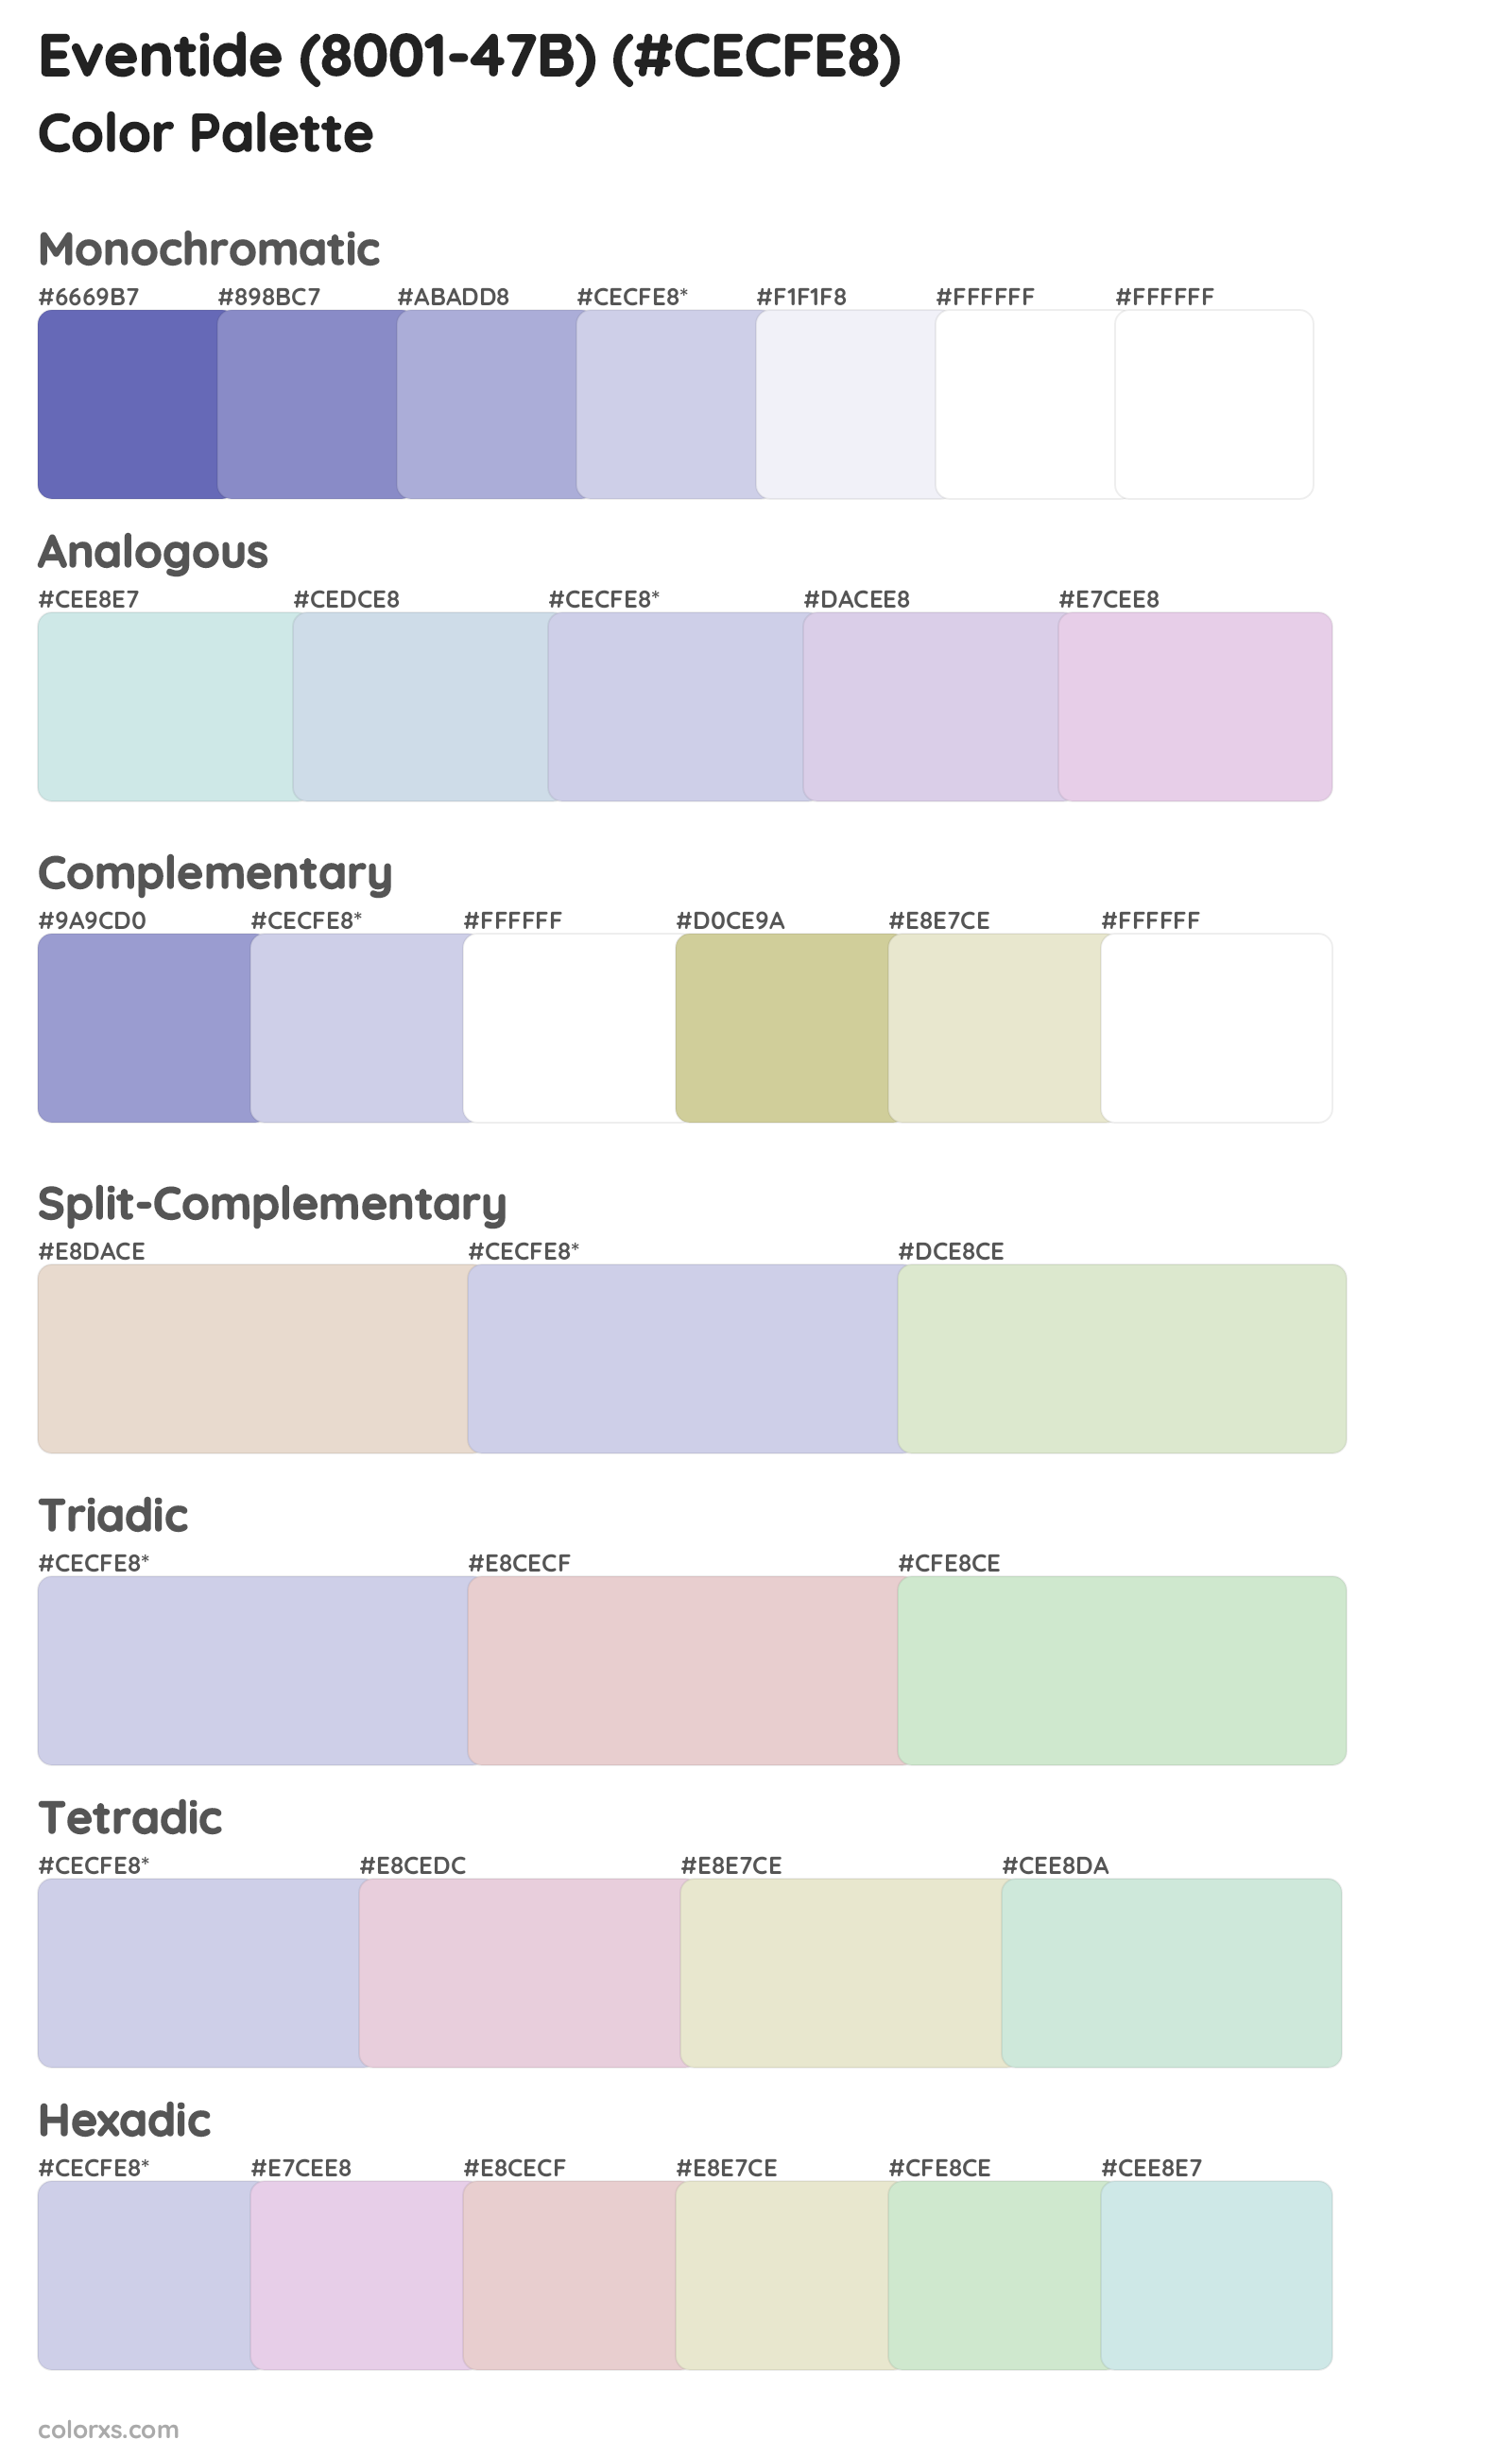 Eventide (8001-47B) Color Scheme Palettes